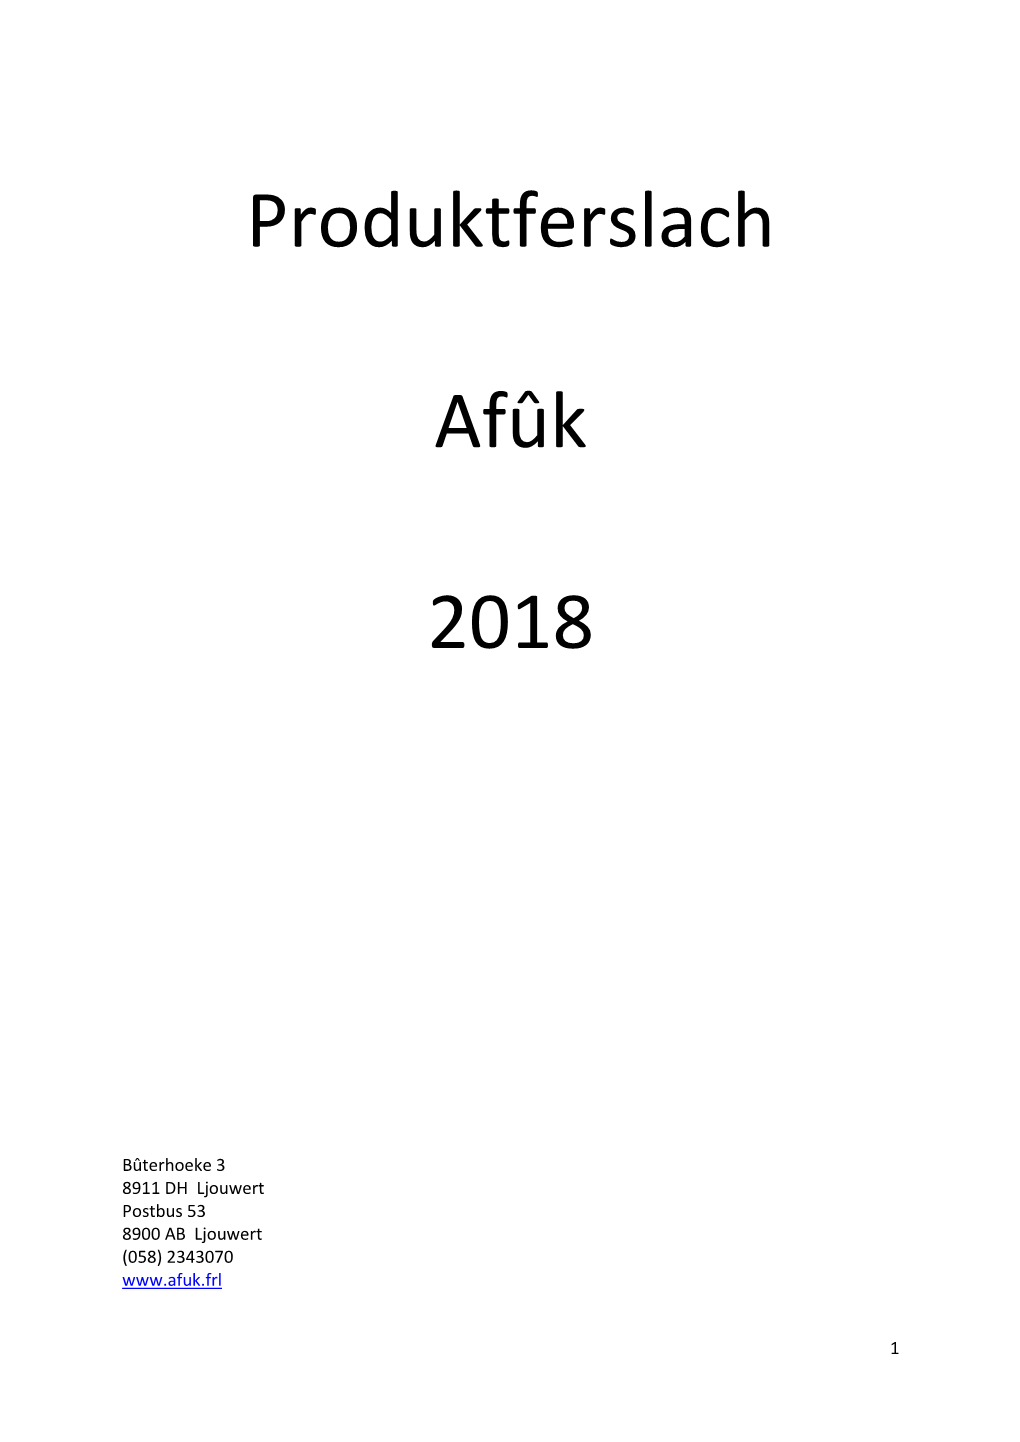 Produktferslach Afûk 2018